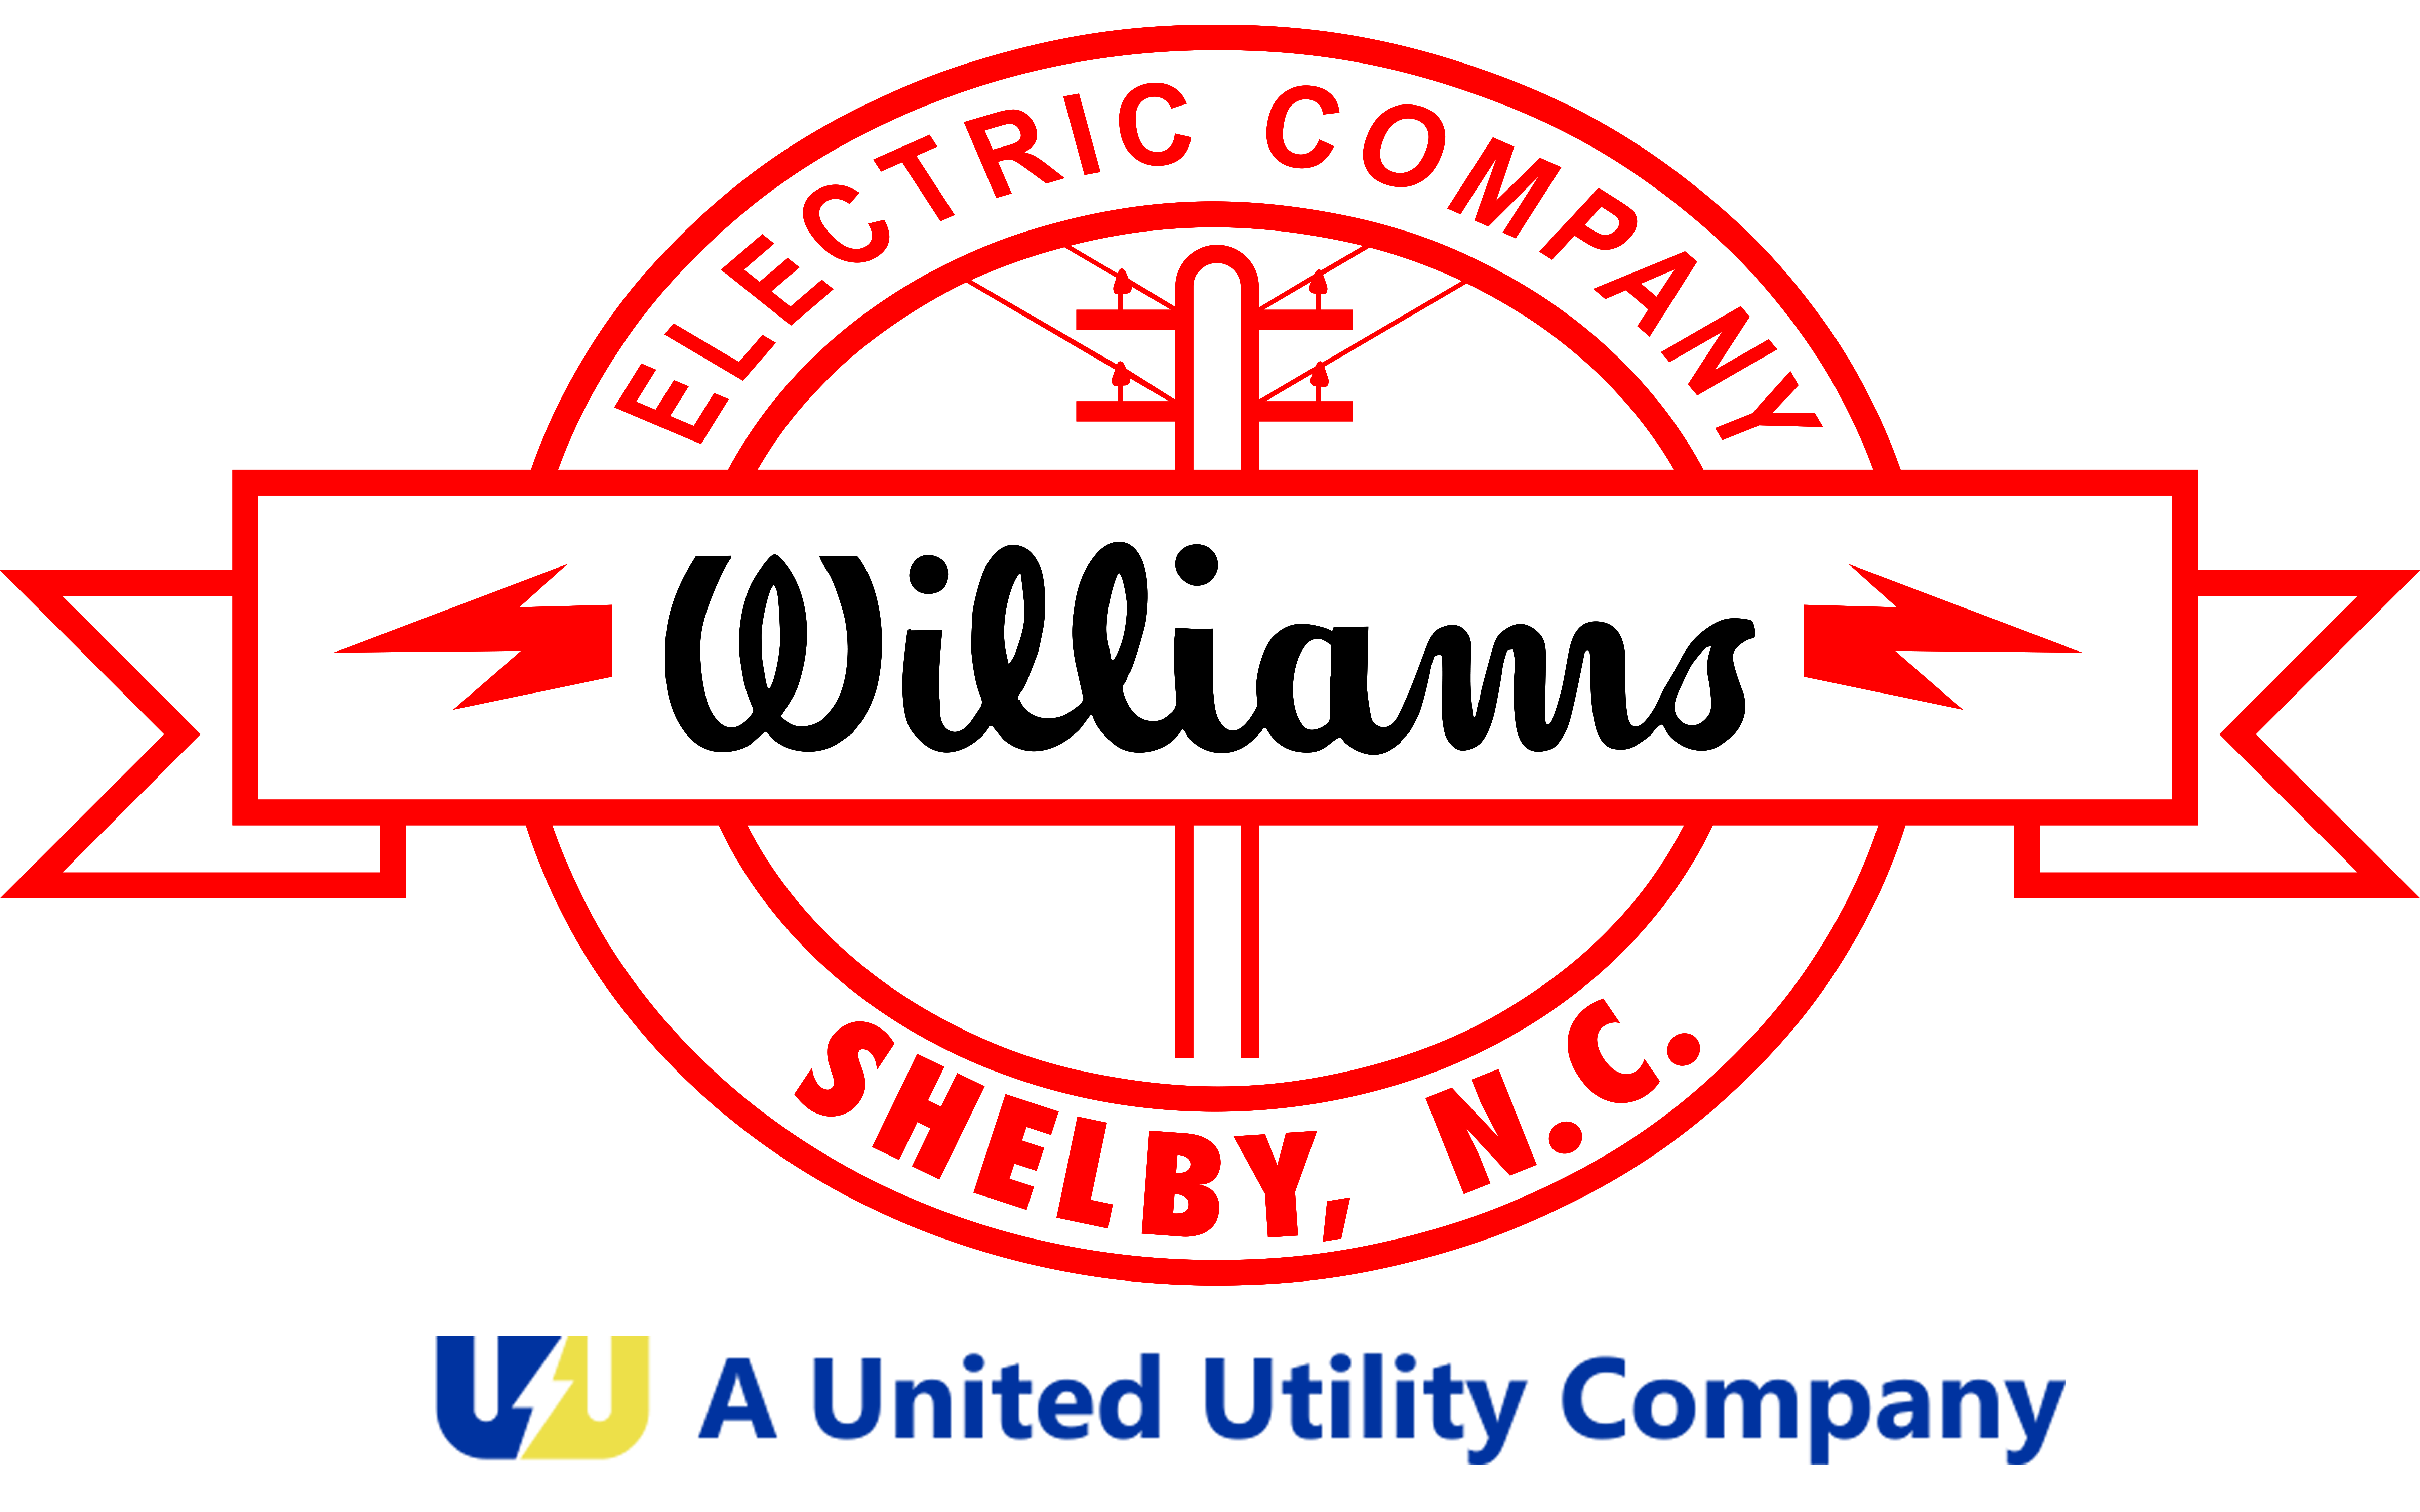 Williams Electric Company - 